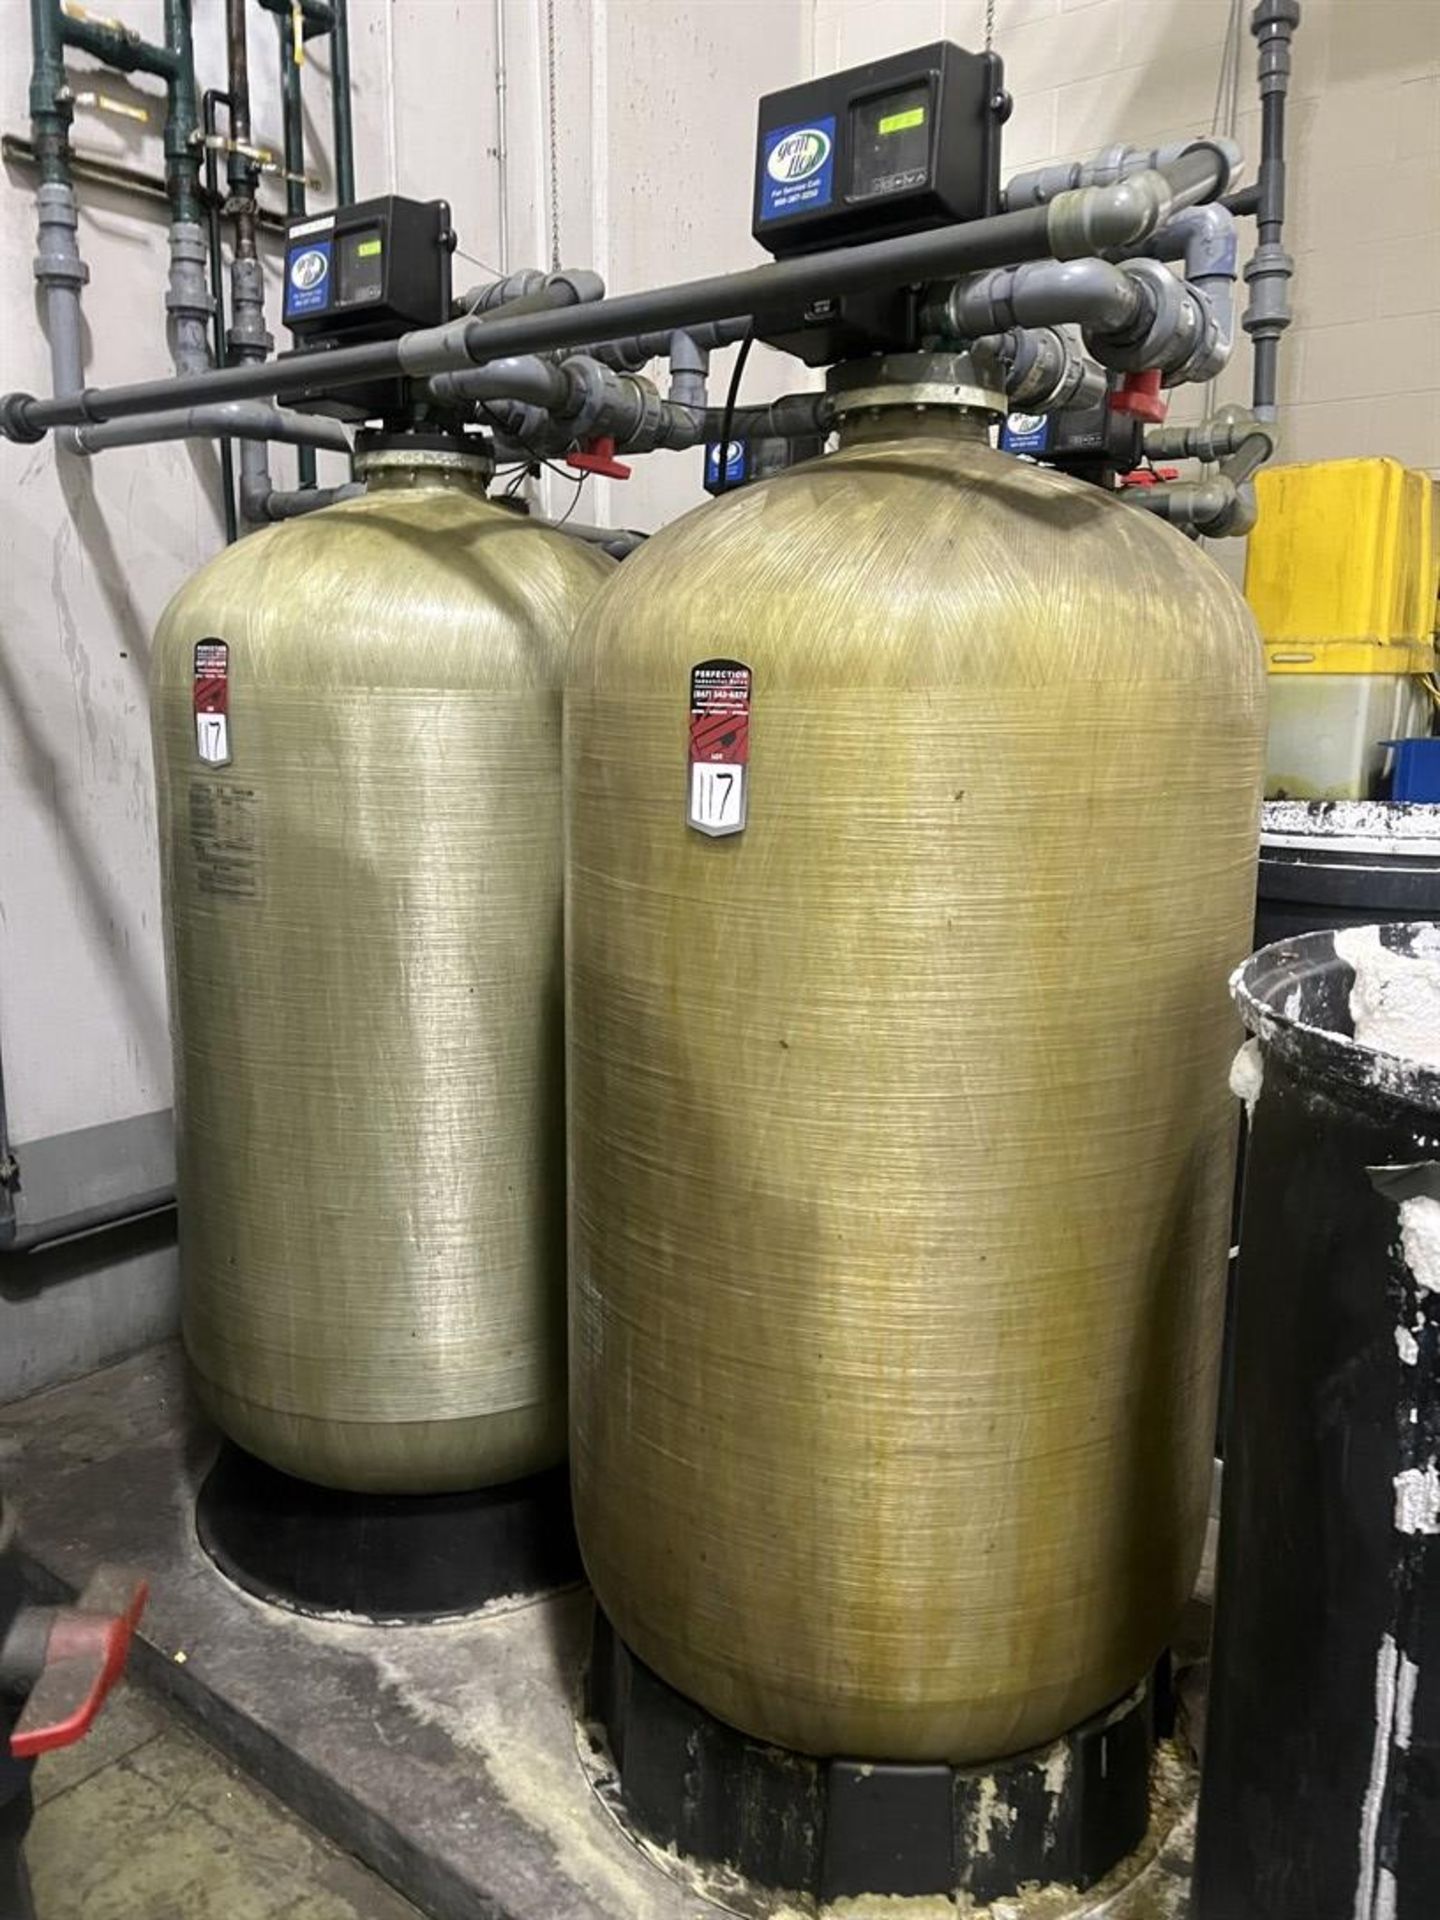 GEM FLOW Water Softener System w/ Brine Tank and (2) CLACK 3672 Polyethylene Lined Vessels - Image 3 of 6